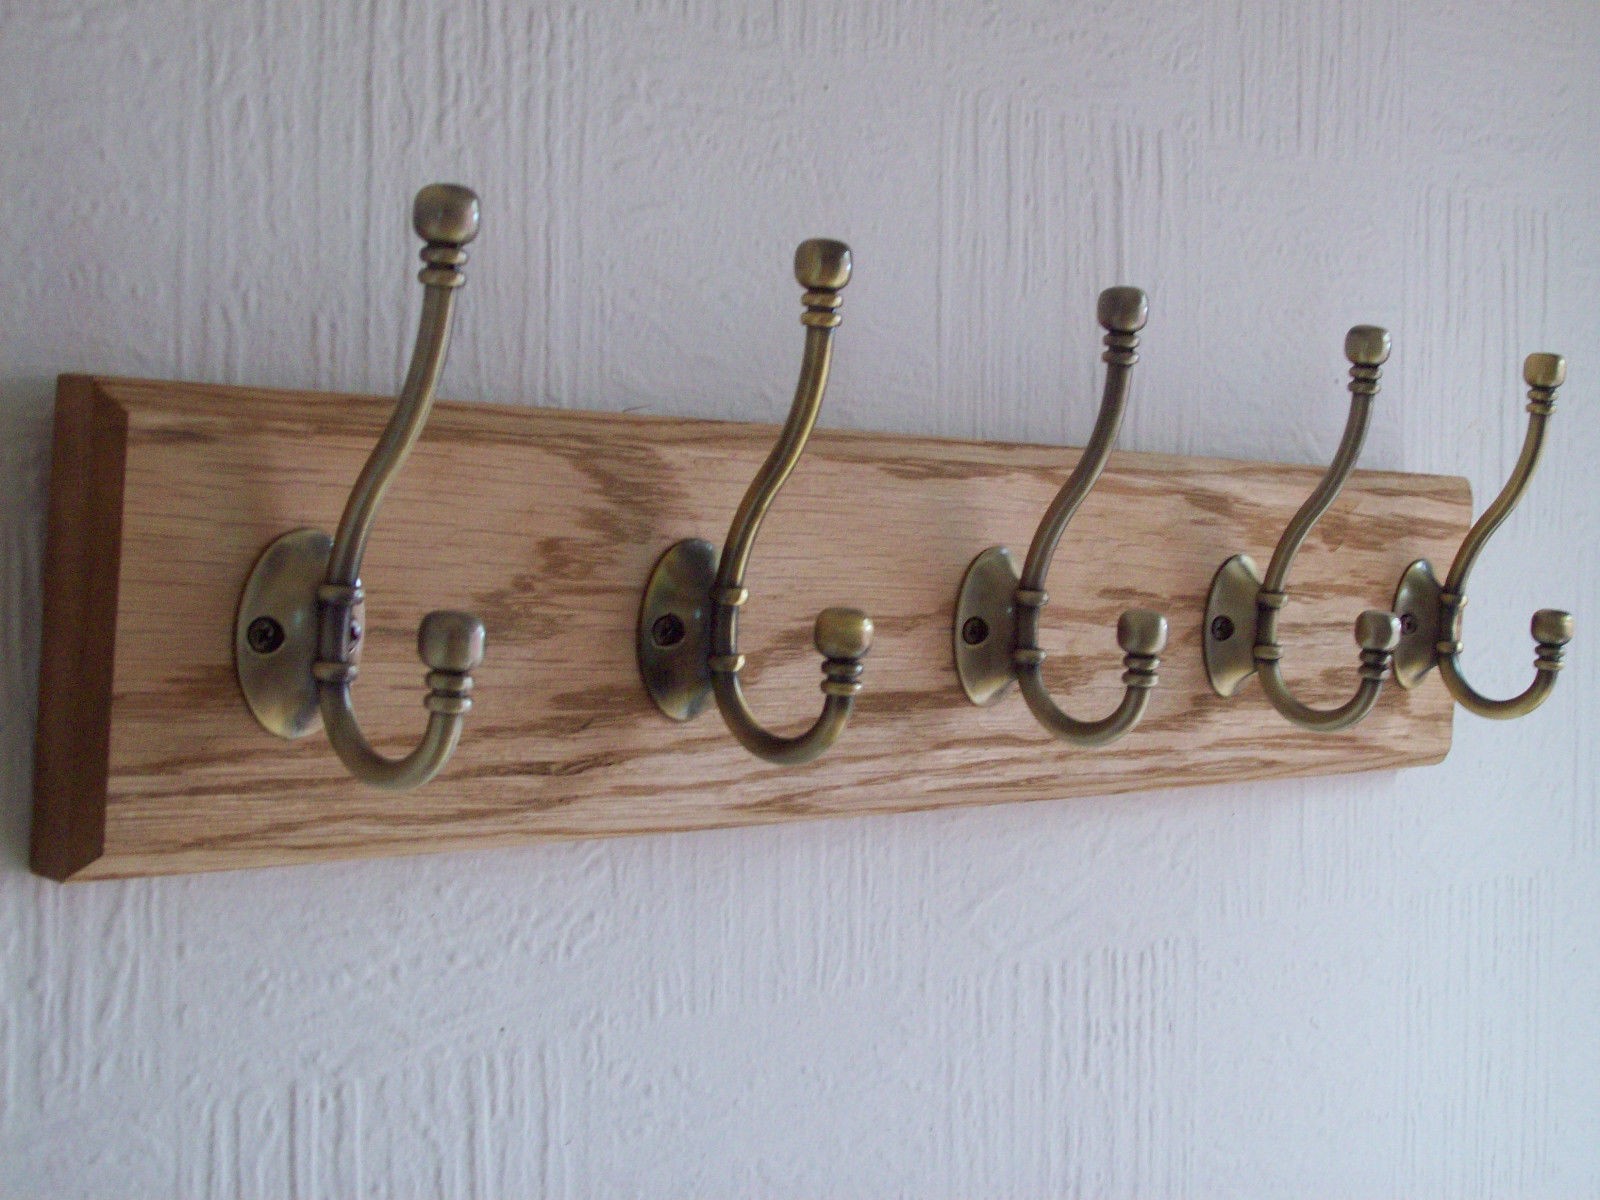 Aged Brass Coat Hook Rack (9 Hooks)